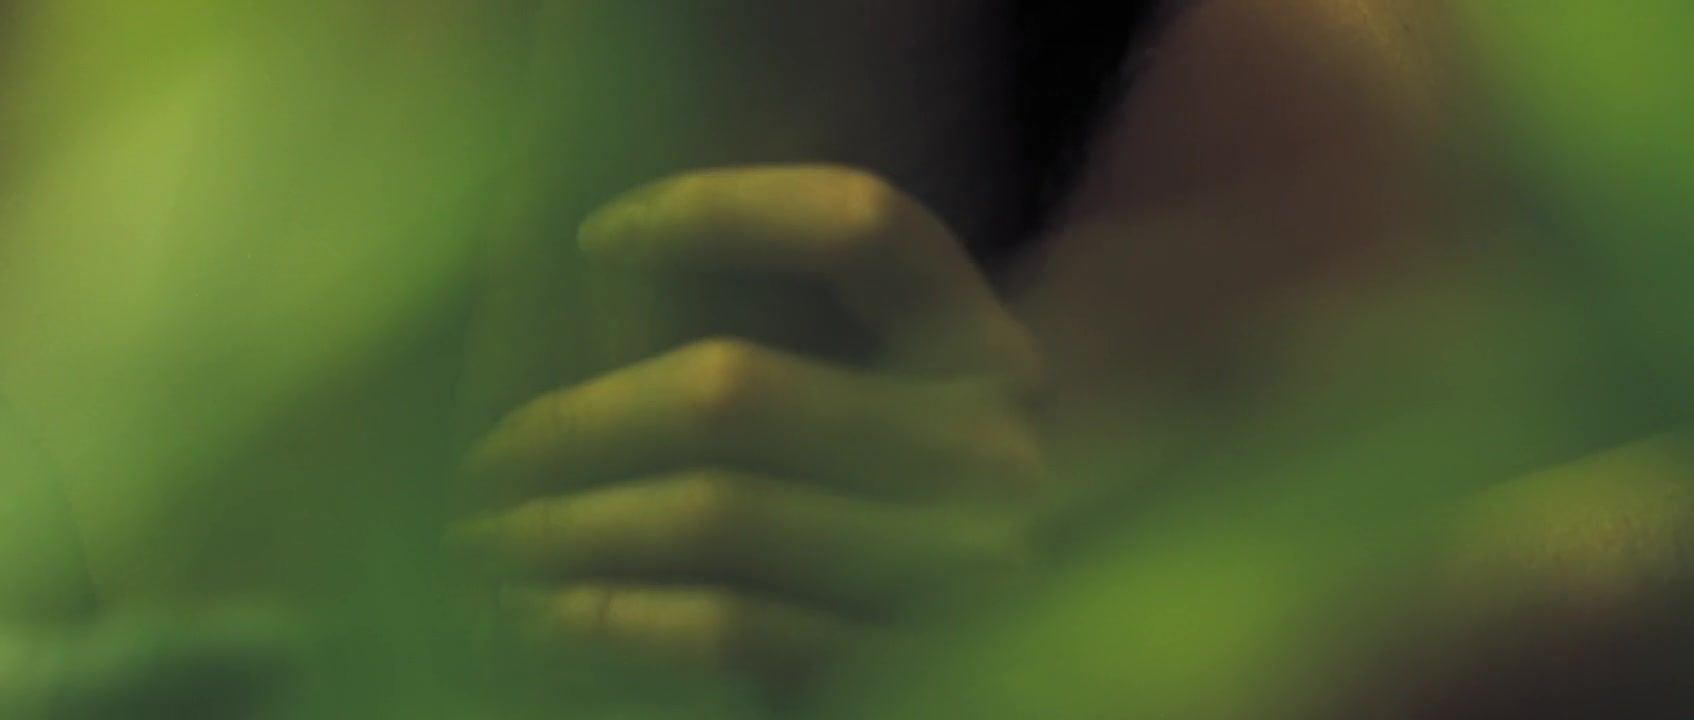 Sexy Girl Sex Maria Valverde nude in Movie (2013) Spanish Actress JiggleGifs - 1